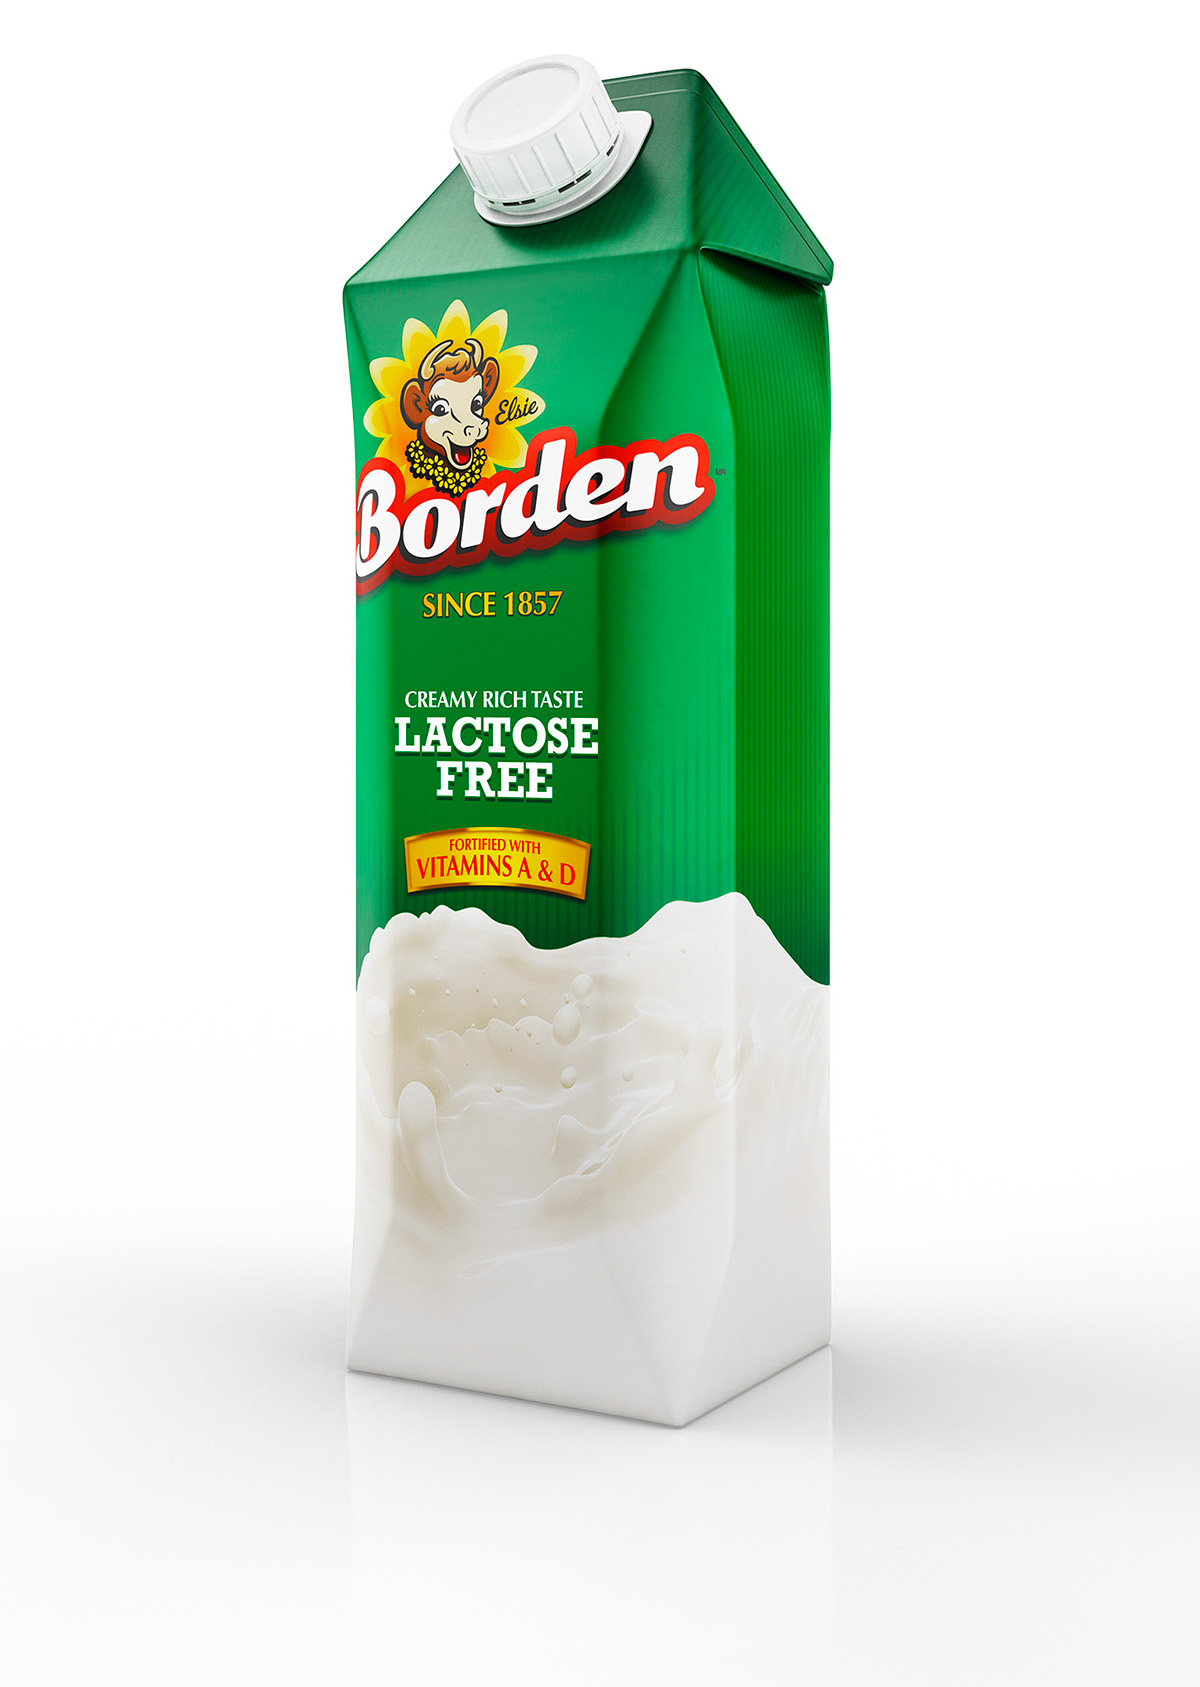 Souverein CG 3D postproduction borden milk carton Dairy Marcel Christ luminous creative imaging fedde souverein